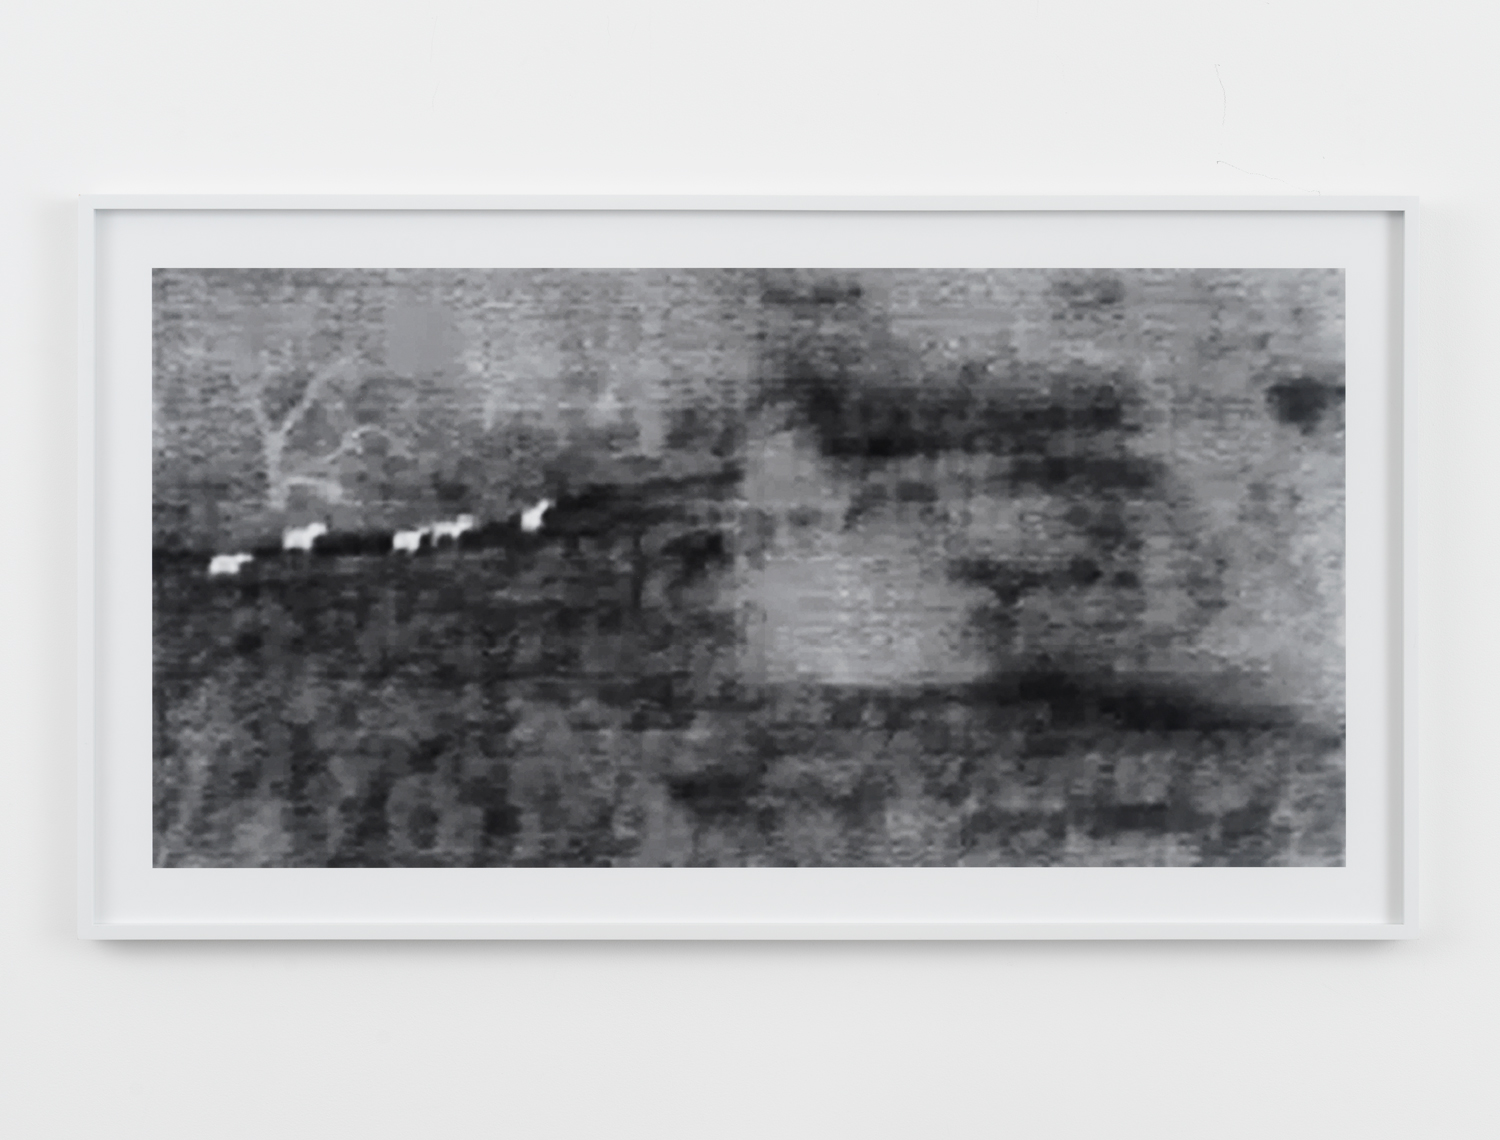 Barbara Ess, Wild Horses [Surveillance Series], 2010, archival pigment print, 24h x 44w in.